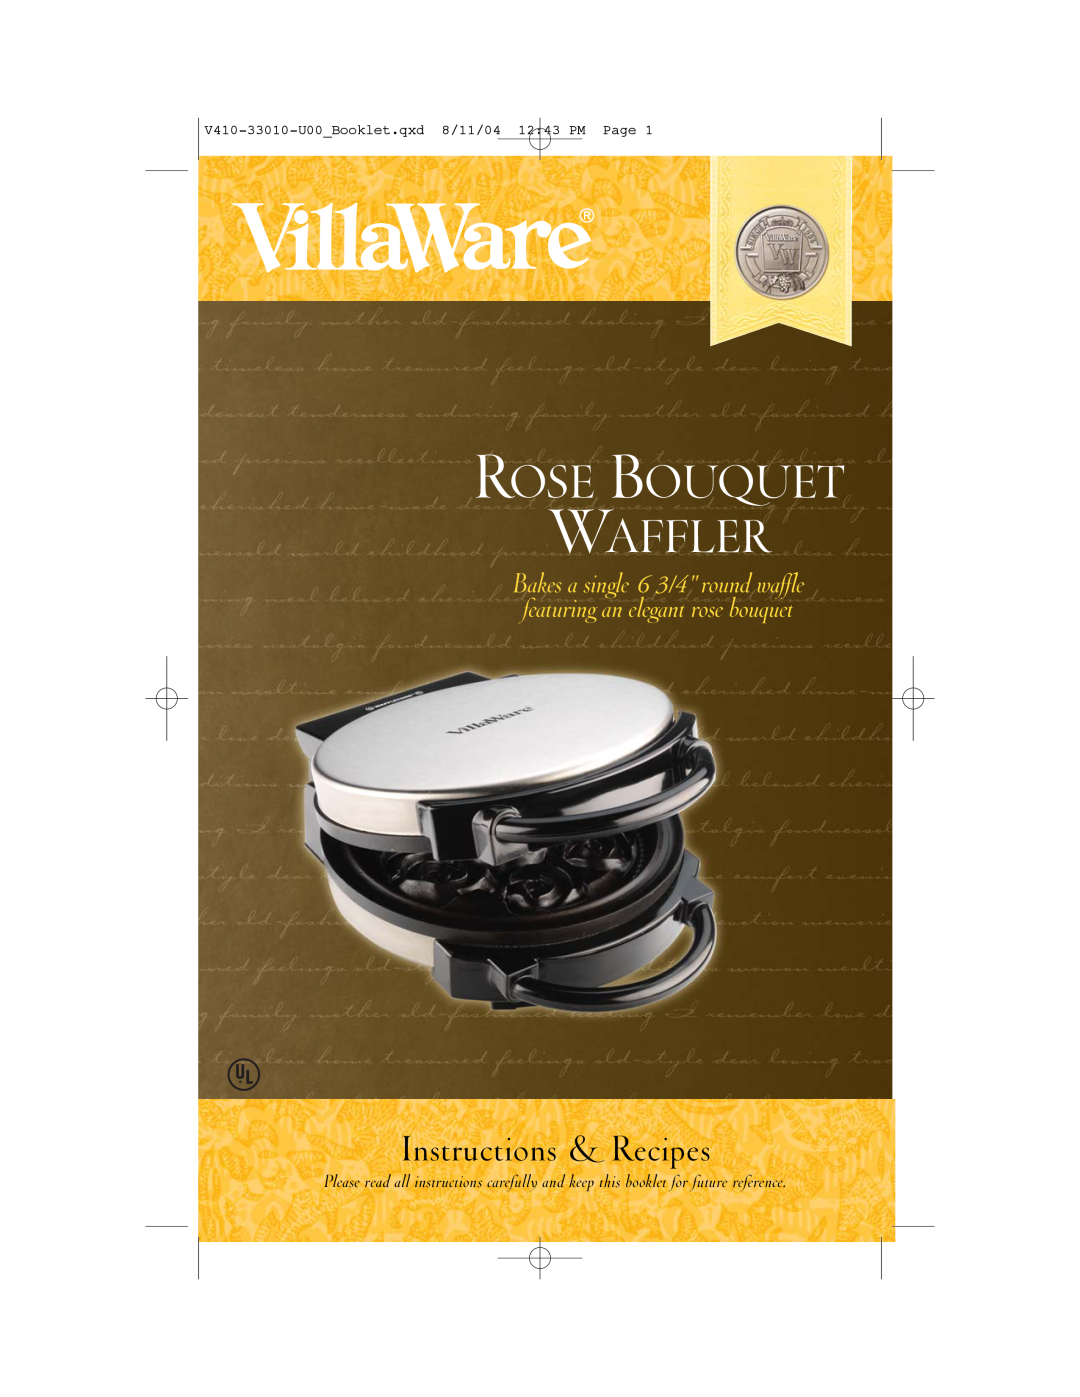 Villaware ROSE BOUQUET WAFFLER manual Instructions & Recipes, Rose Bouquet Waffler 